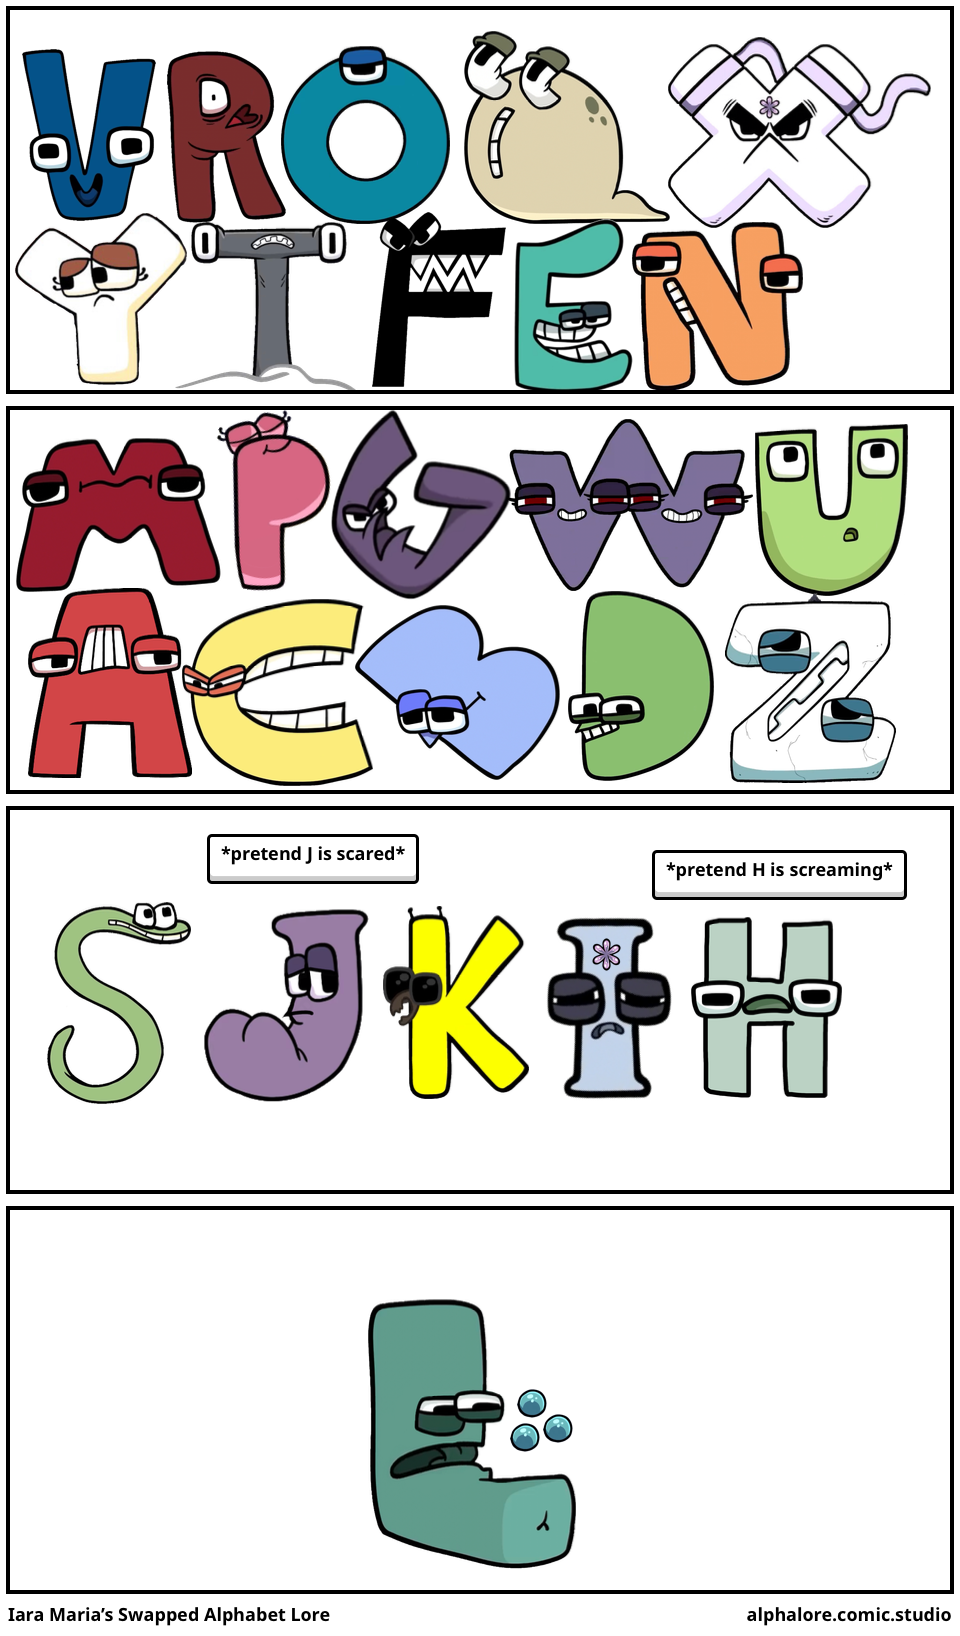 Coming soon on: alphabet lore comic studio : r/alphabetfriends